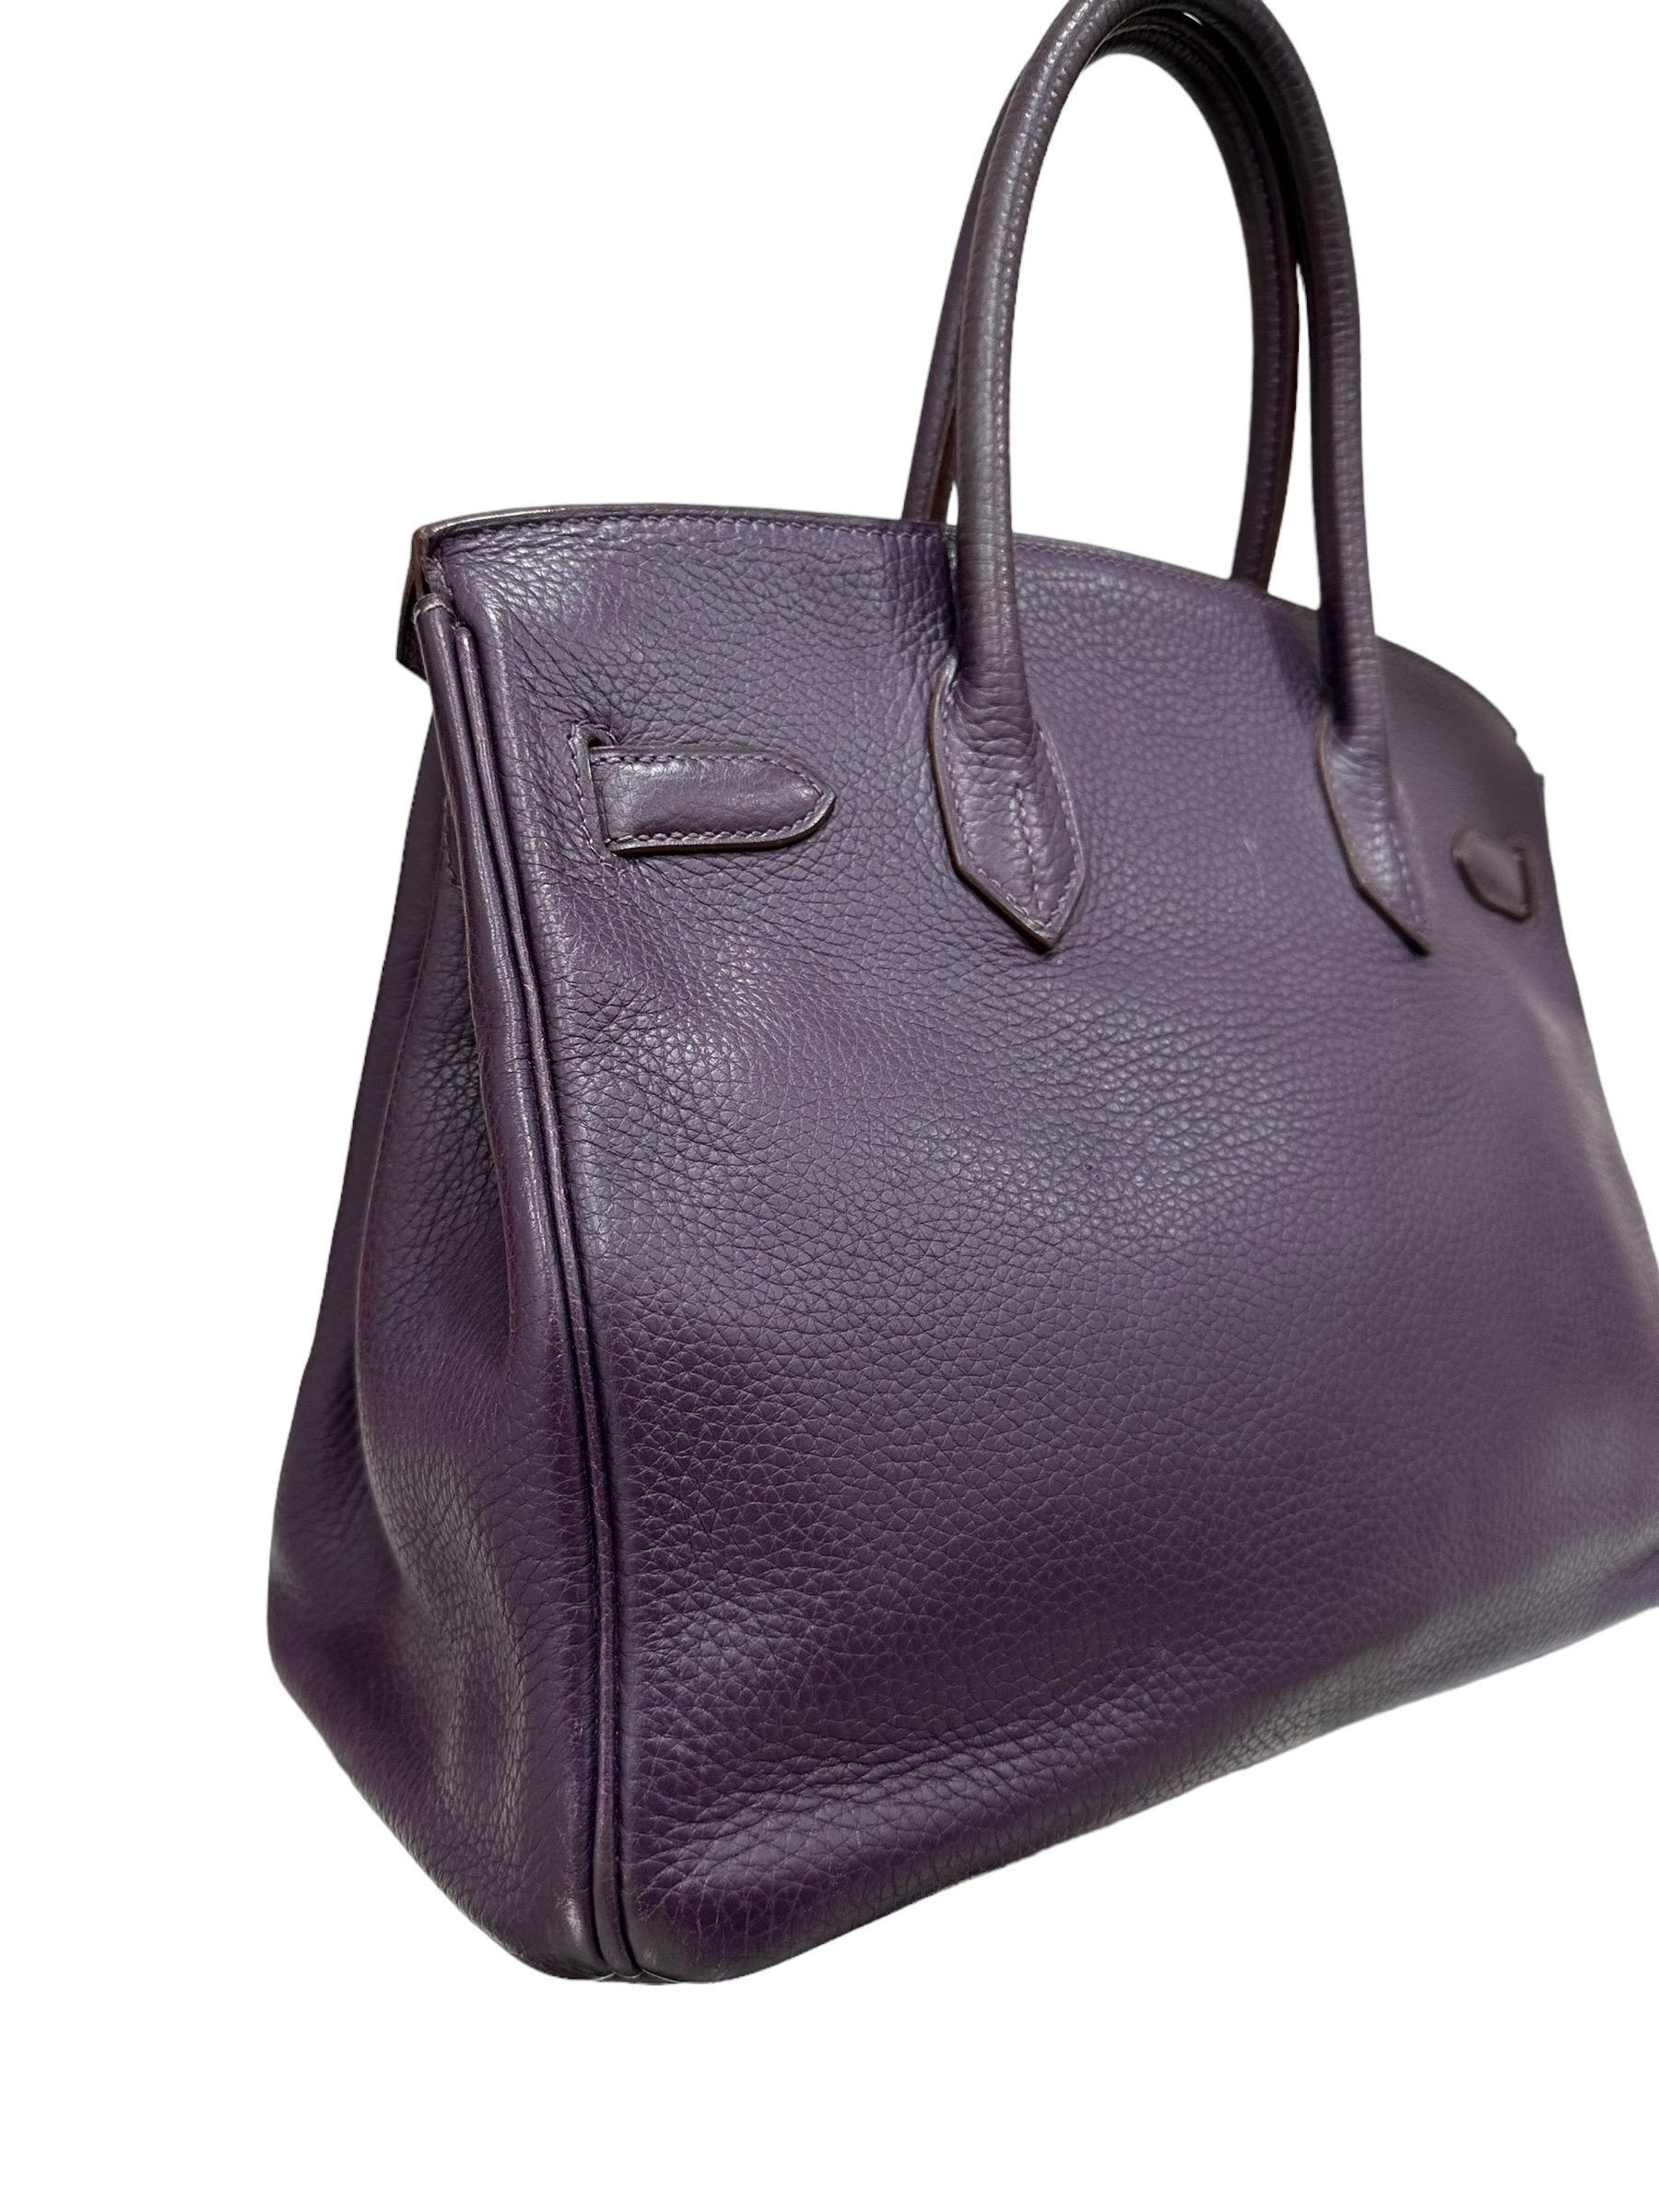 2007 Hermès Birkin 30 Clemence Leather Violet Raisin Top Handle Bag For Sale 5